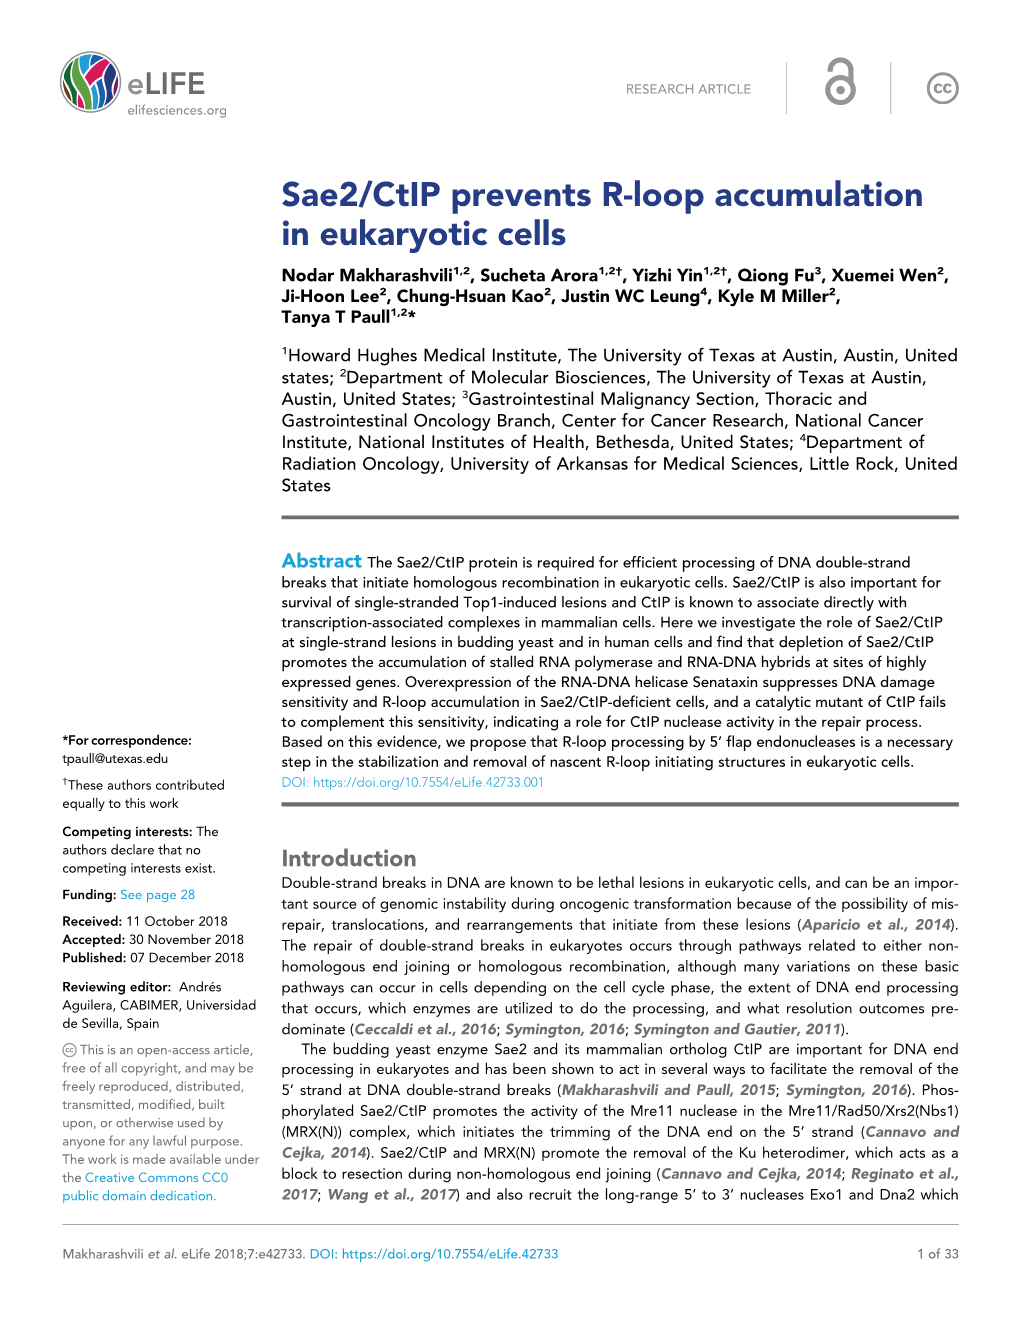 Sae2/Ctip Prevents R-Loop Accumulation in Eukaryotic Cells